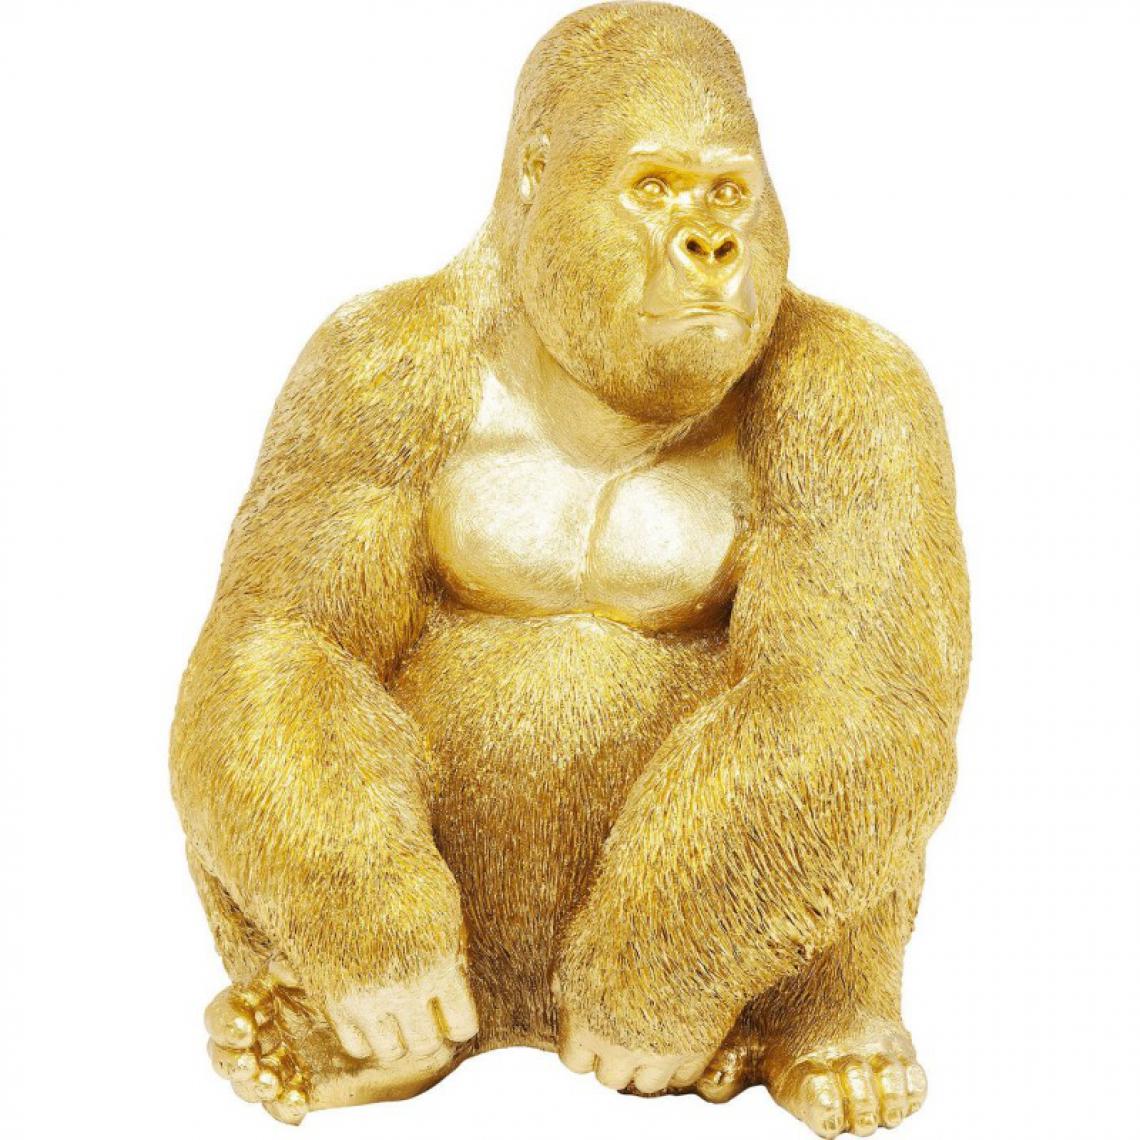 Karedesign - Déco Gorille XL doré Kare Design - Statues